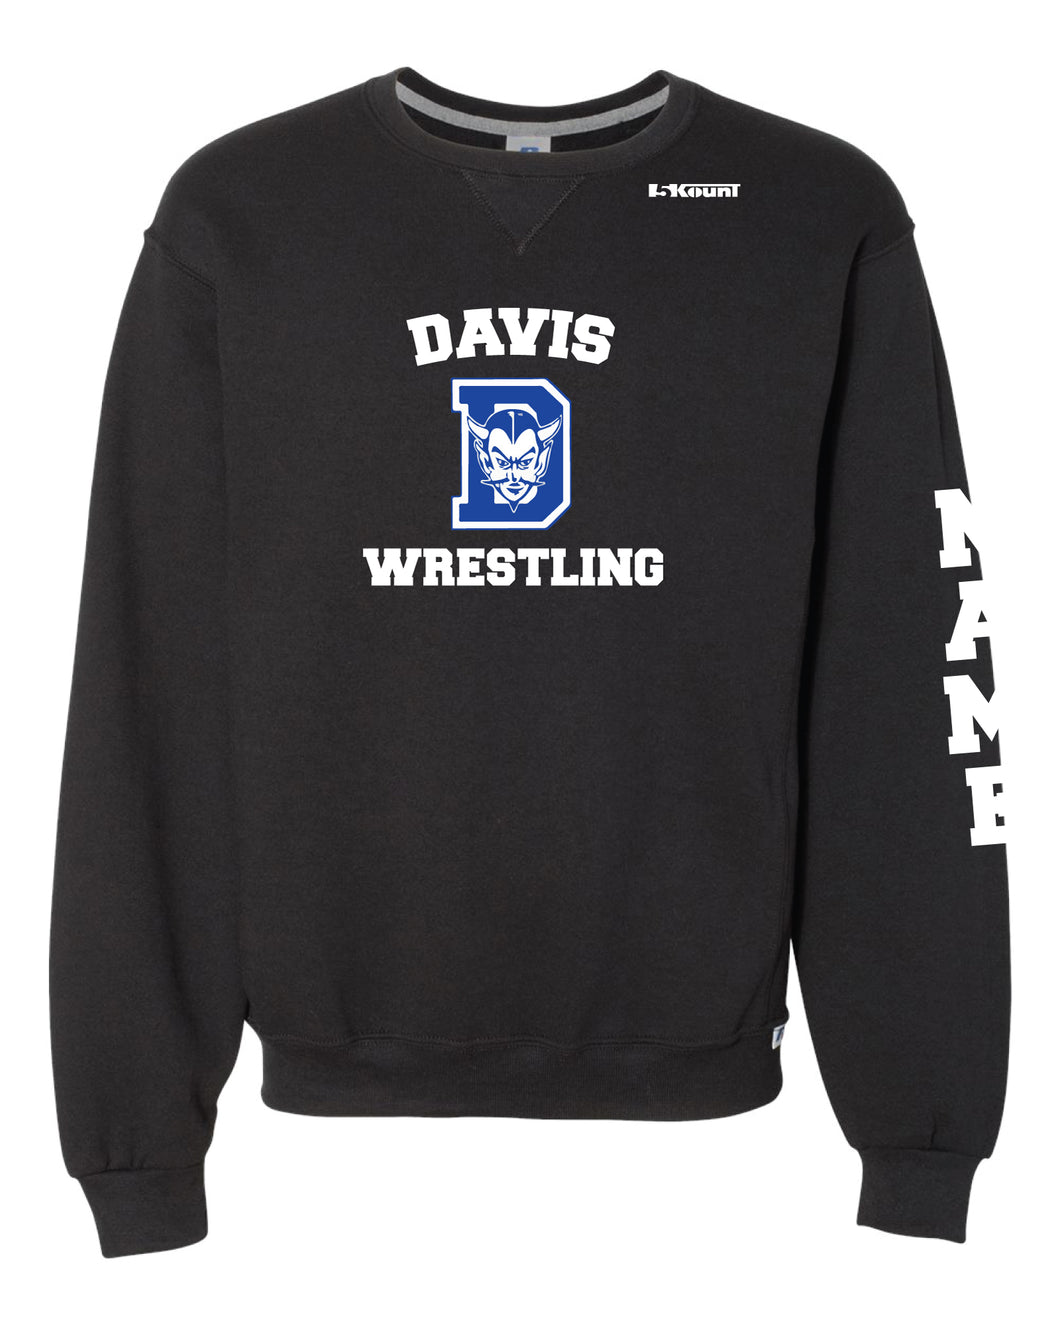 Davis Wrestling Russell Athletic Cotton Crew Neck Sweatshirt - Black - 5KounT2018